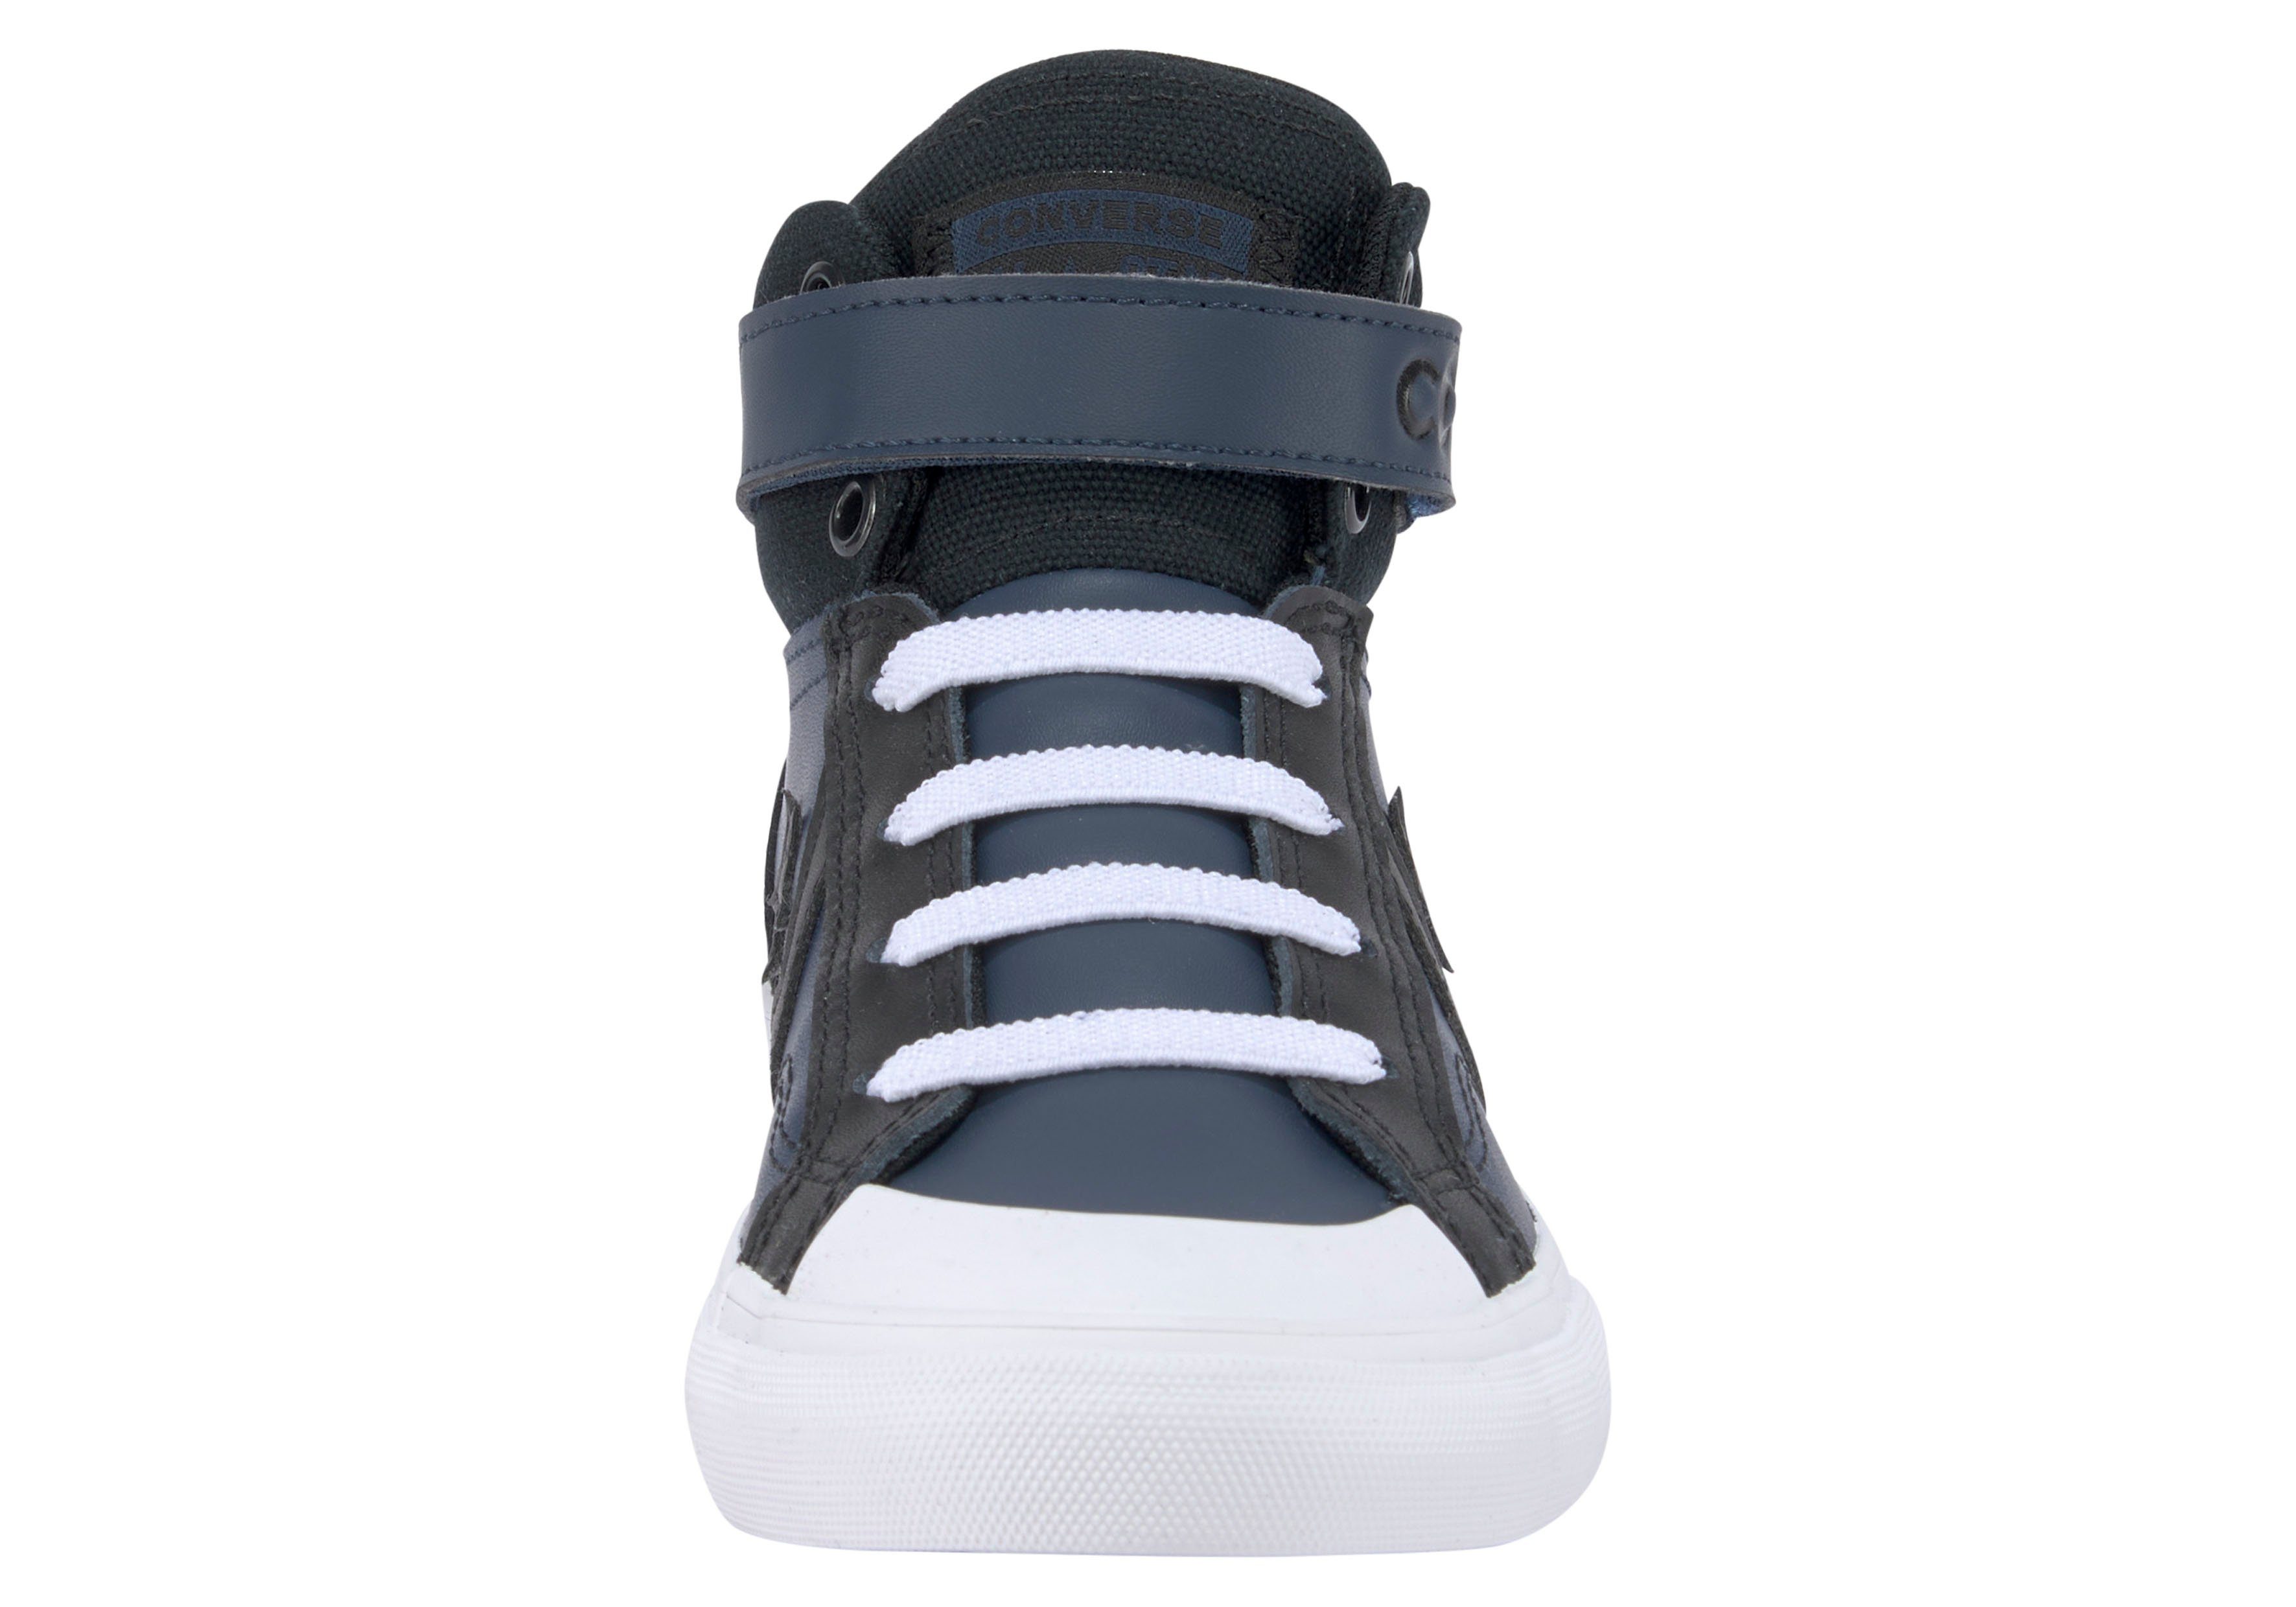 STRAP BLAZE SPORT PRO REMASTERED Sneaker Converse